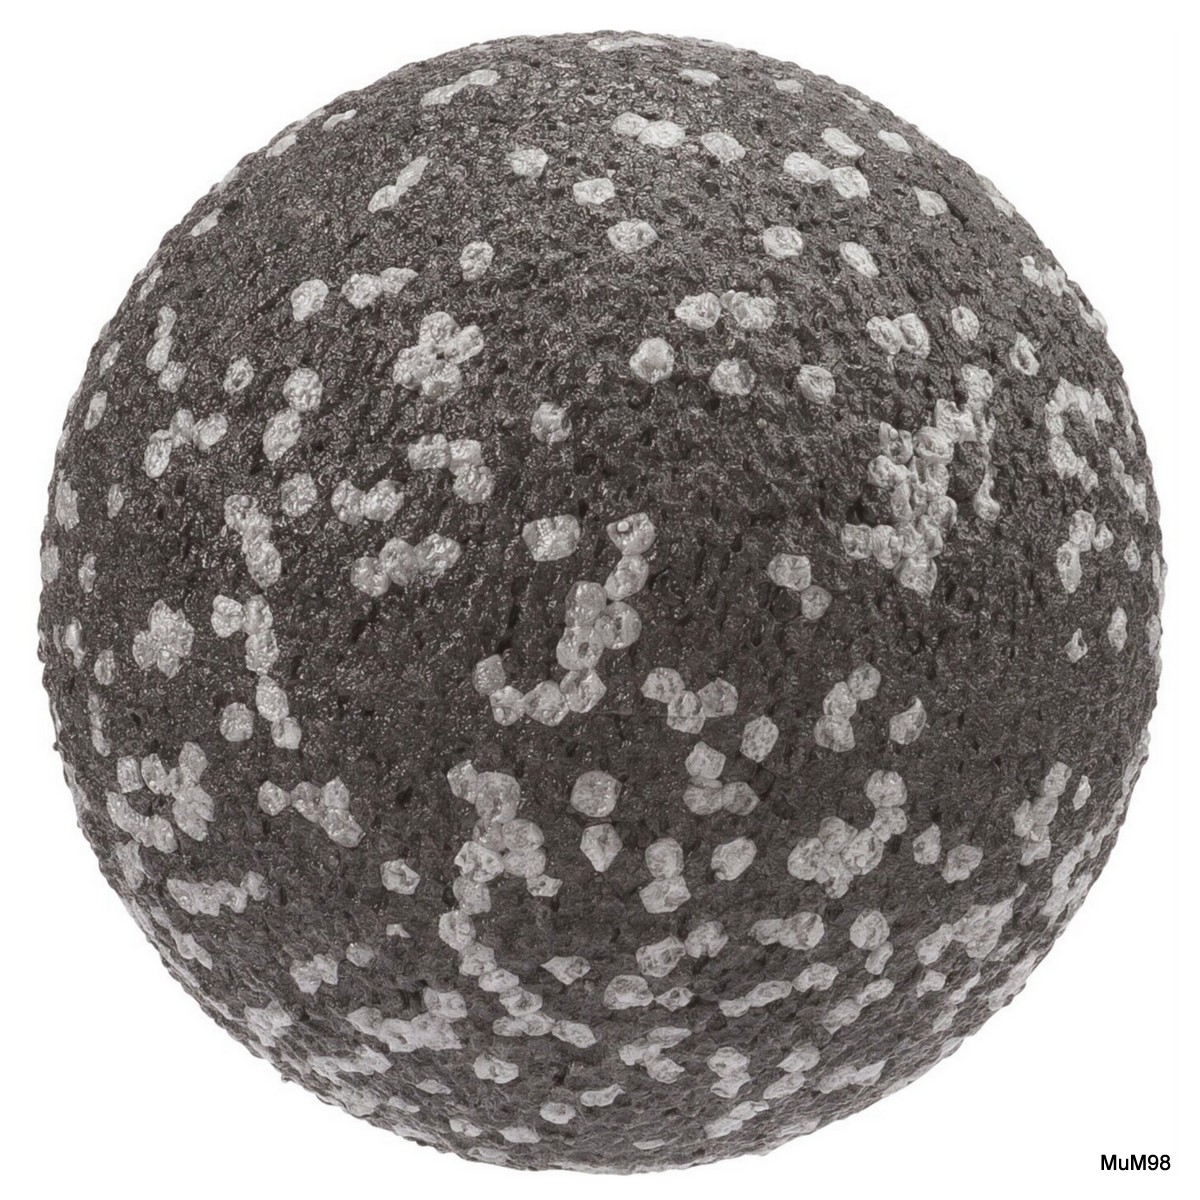 BLACKROLL Faszienball 8 cm